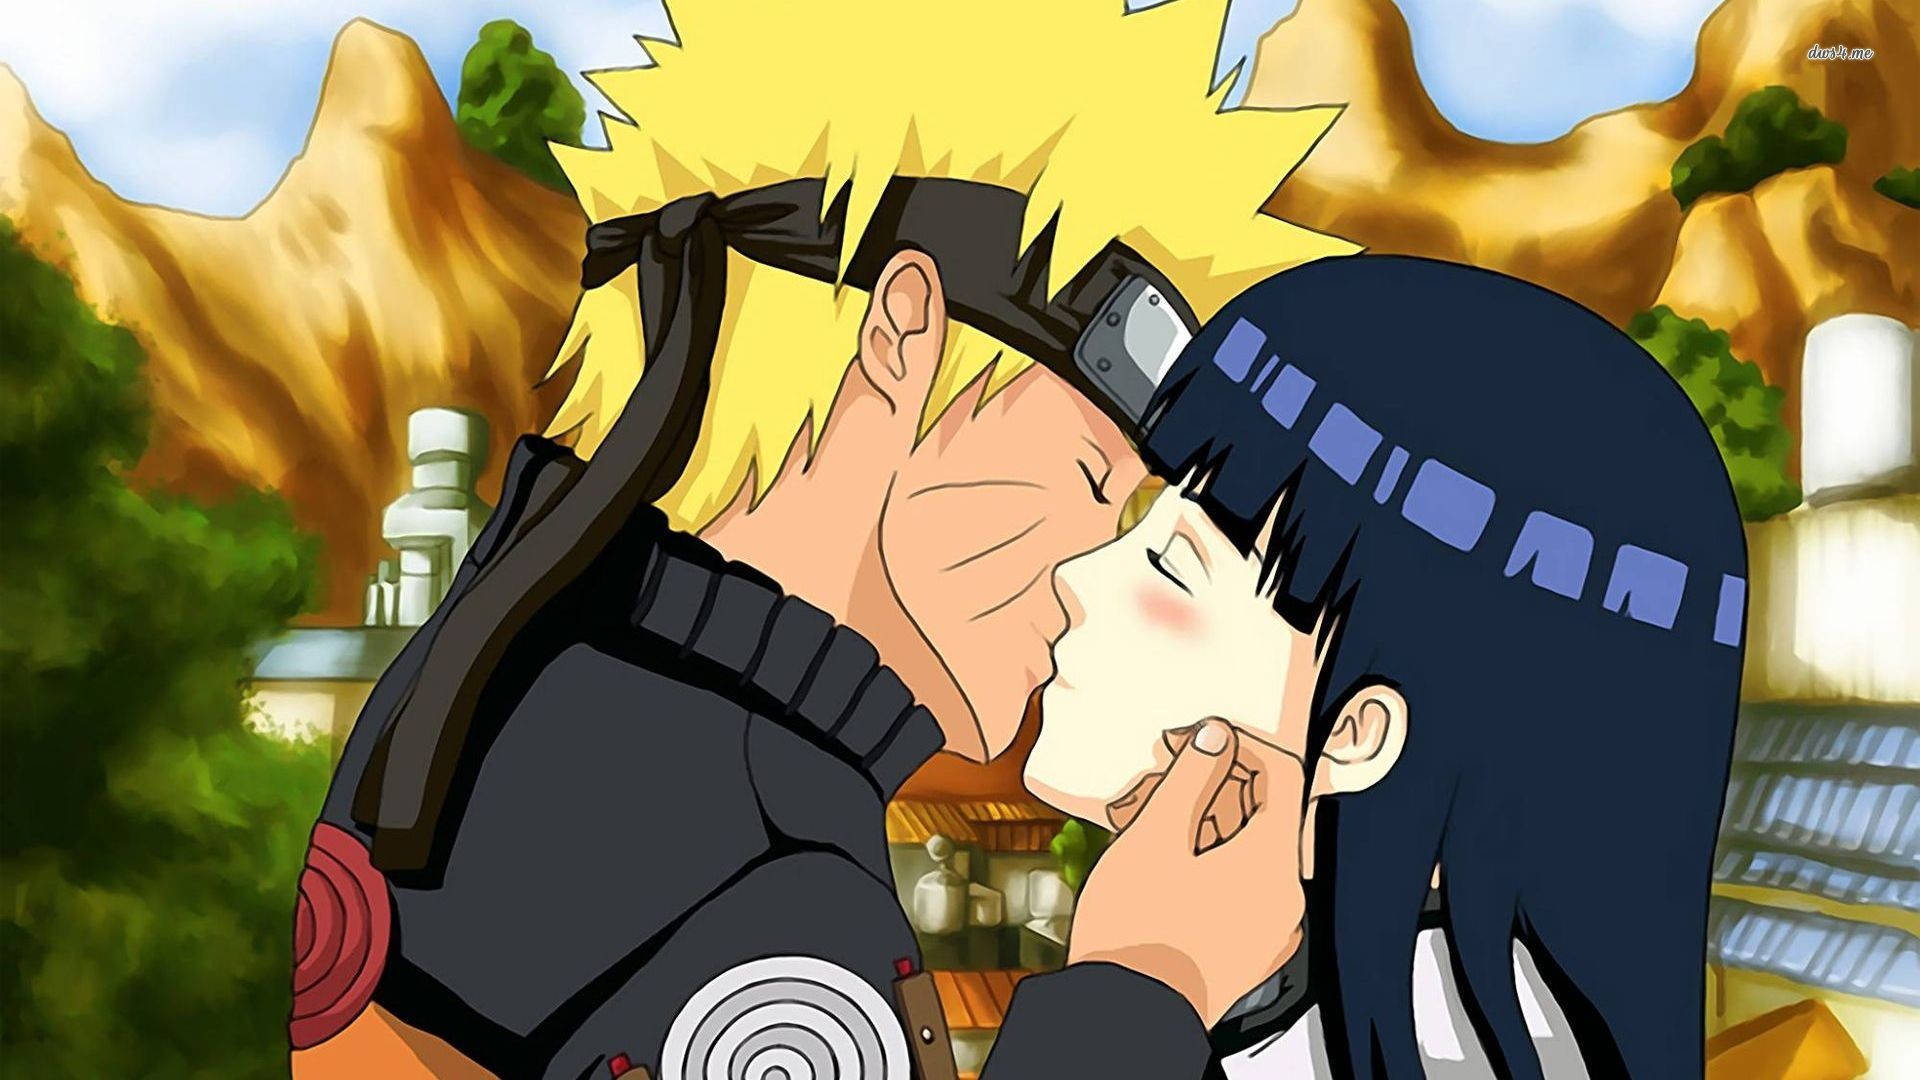 Blushing Hinata Anime Couple Kiss Scene Wallpaper